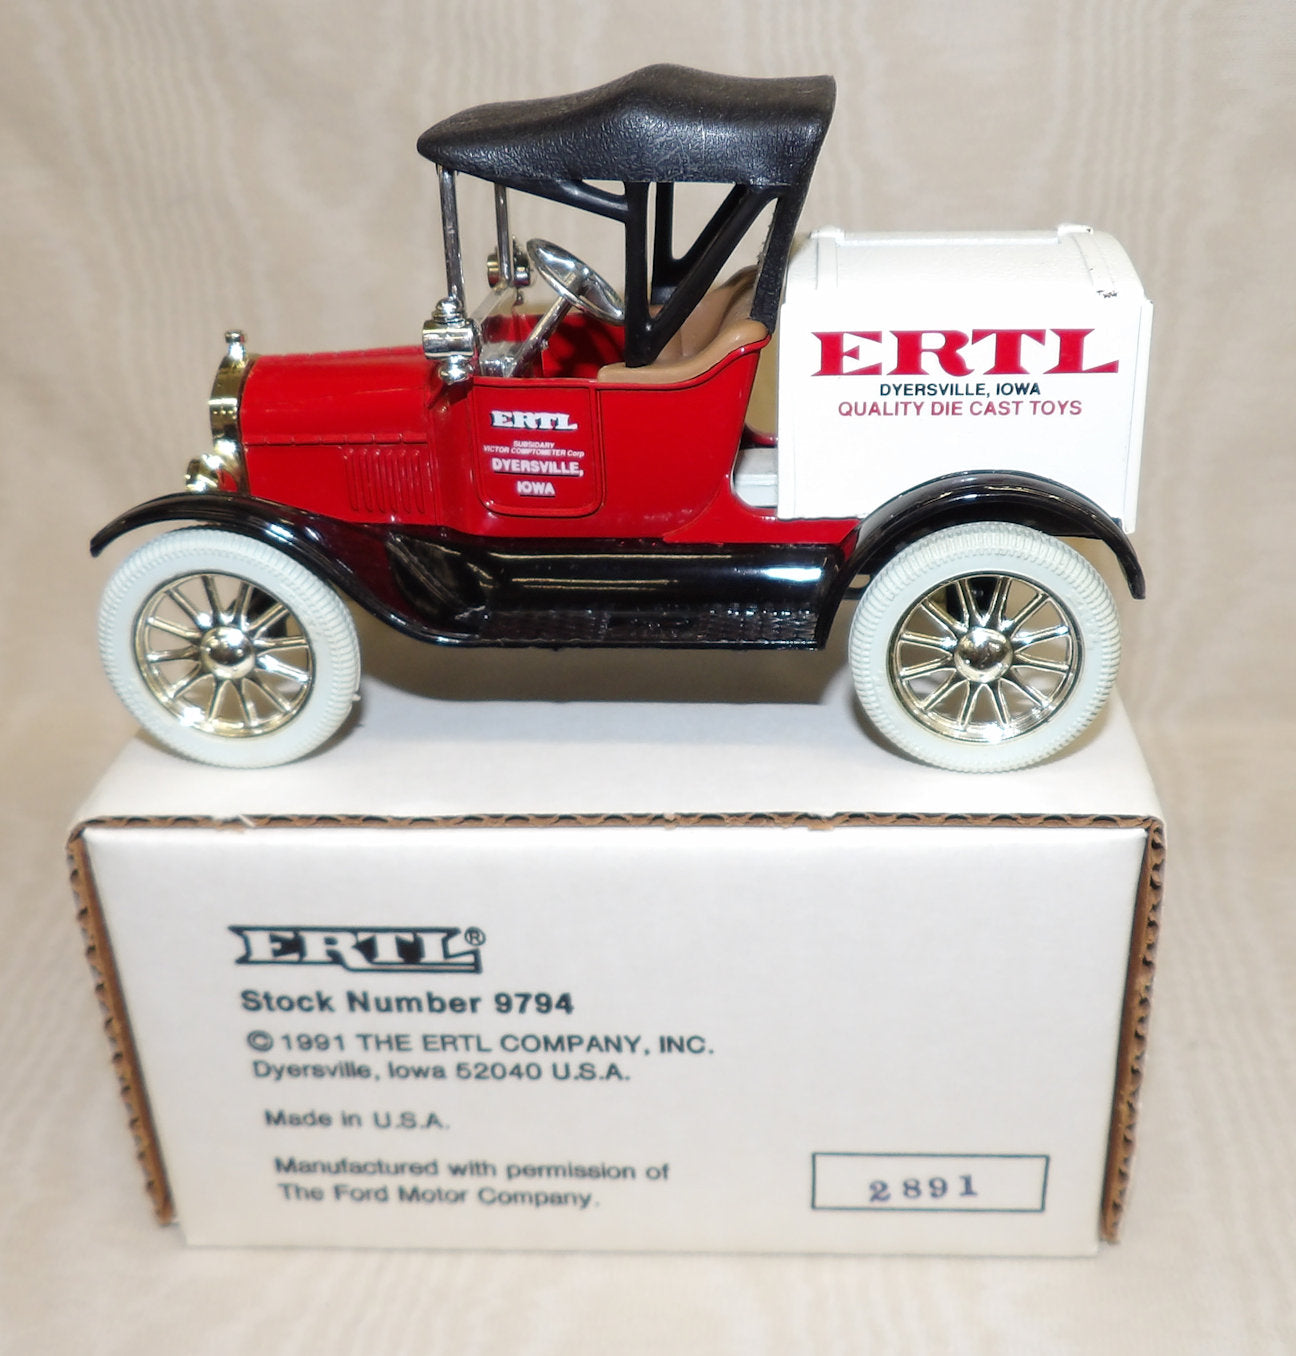 Elmer's Glue 1918 Ford Model T Bank